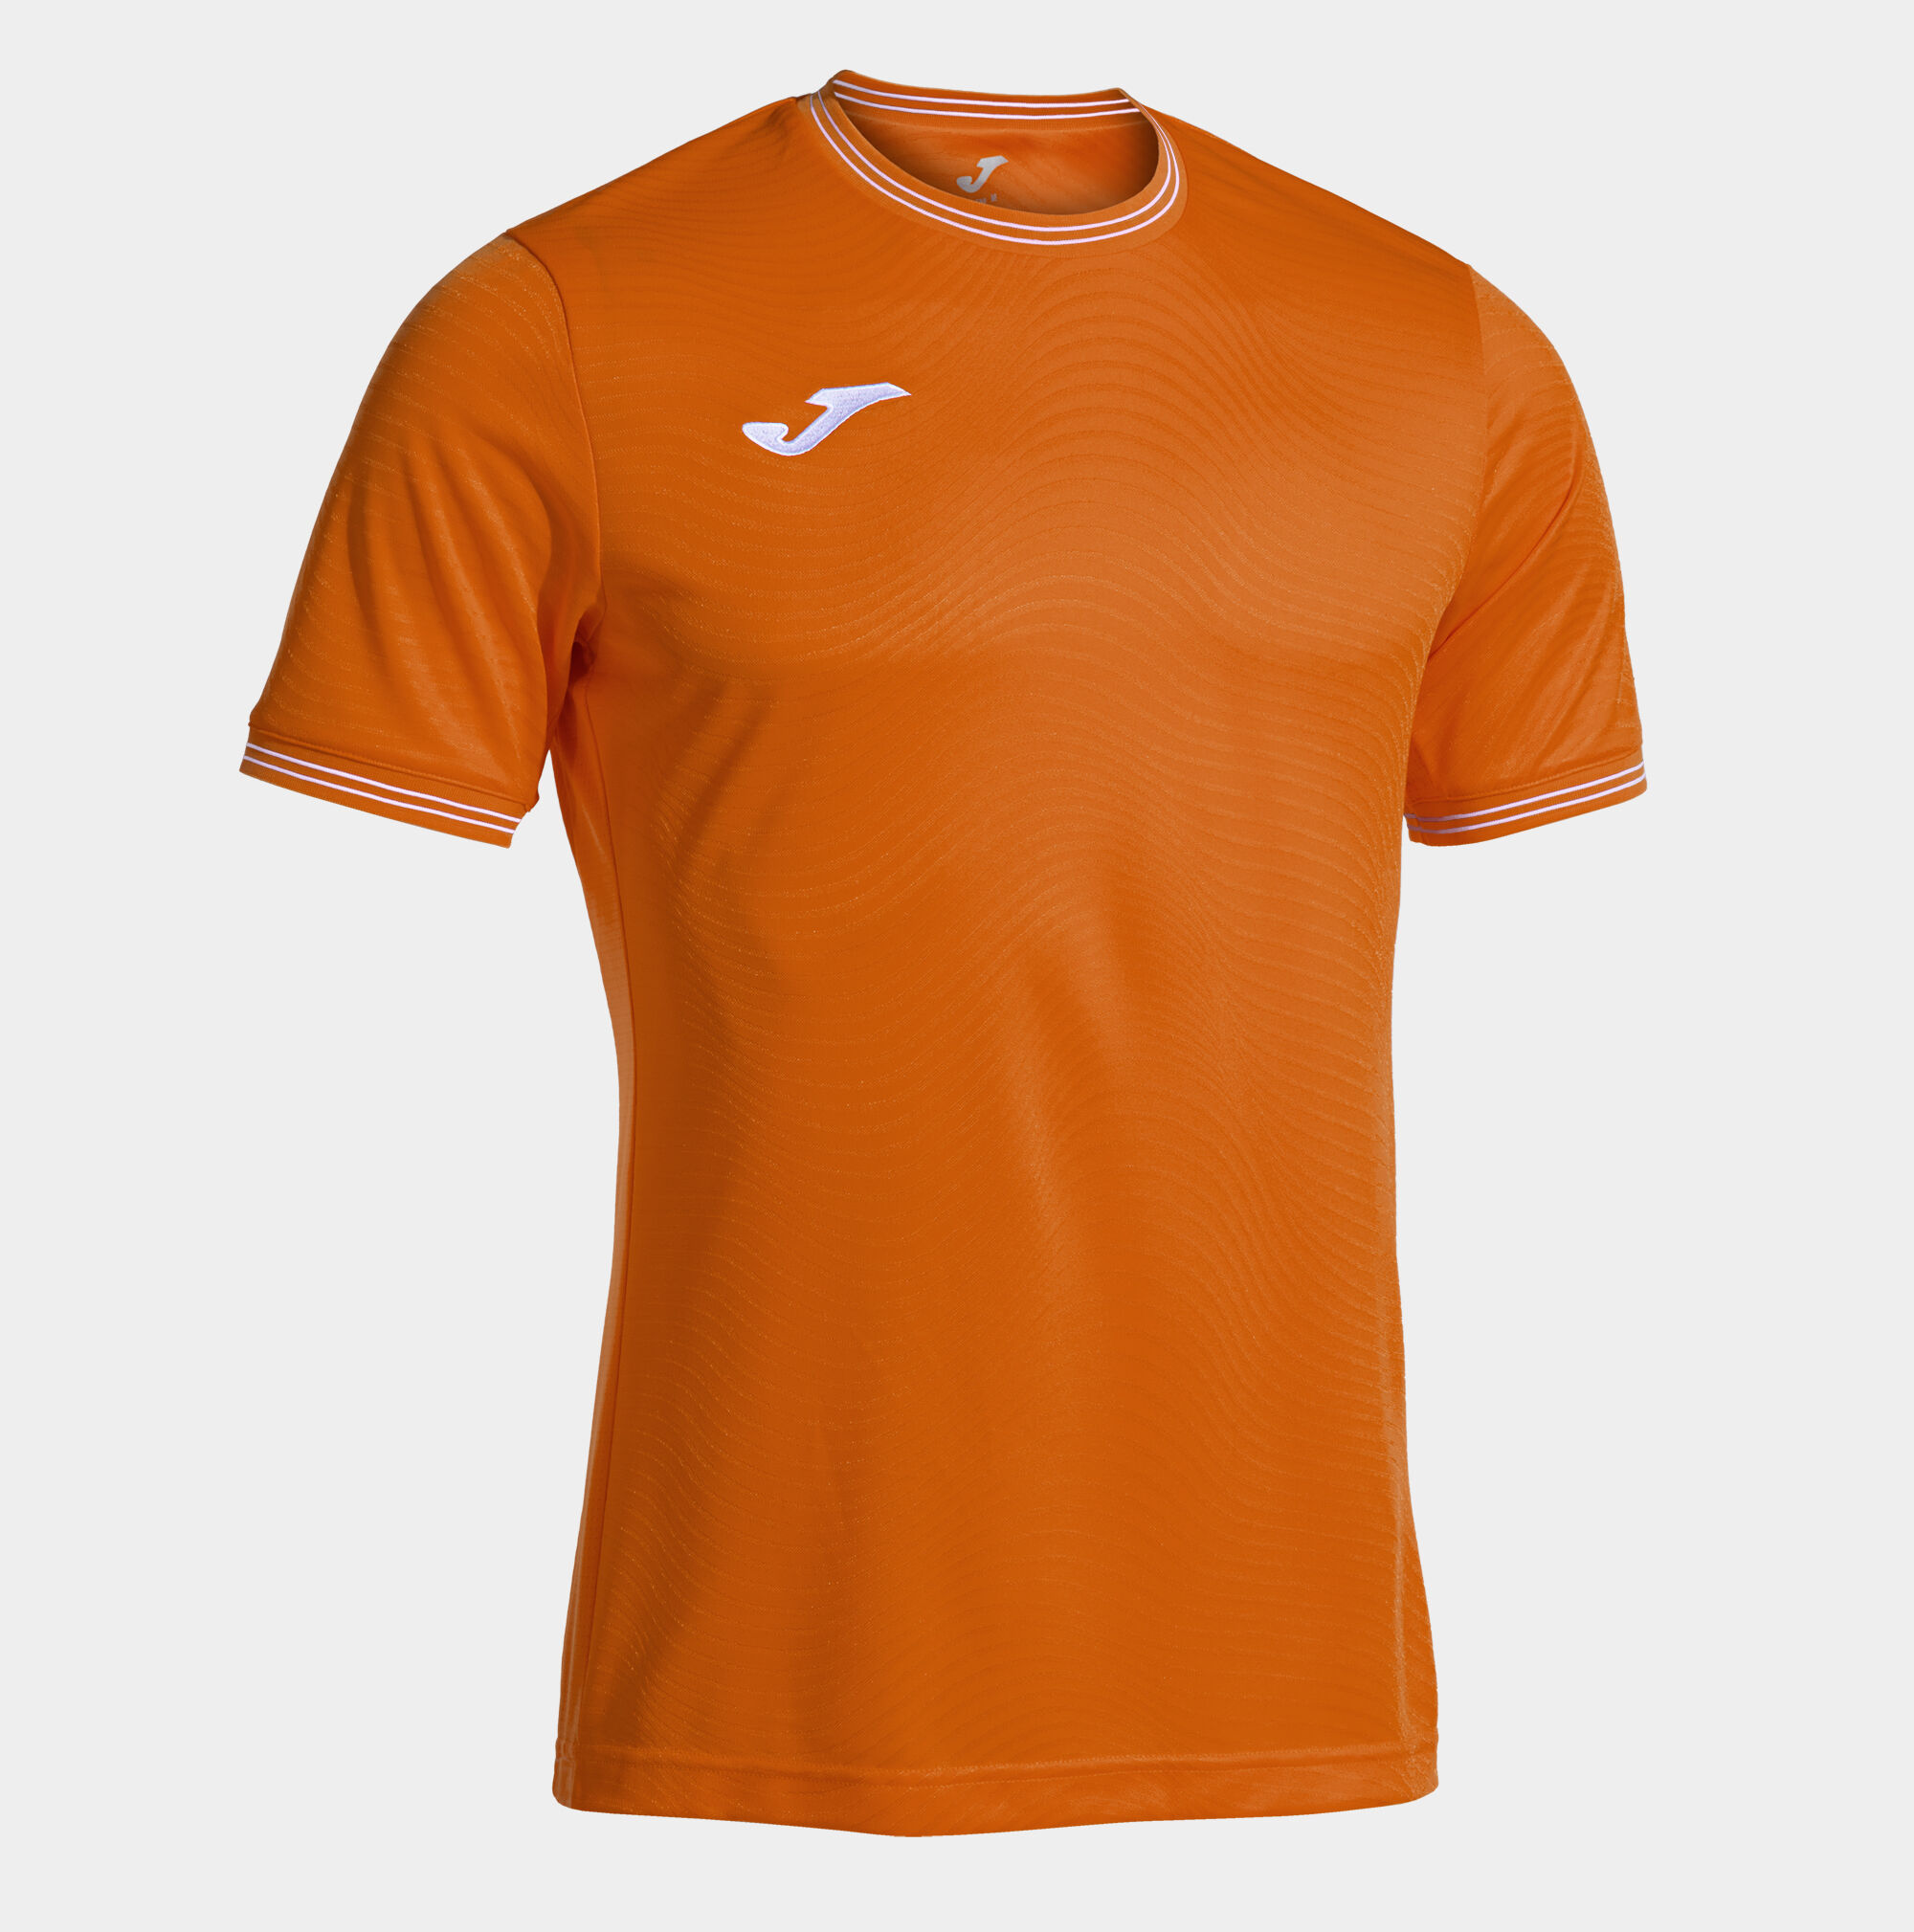 Shirt short sleeve man Toletum V orange